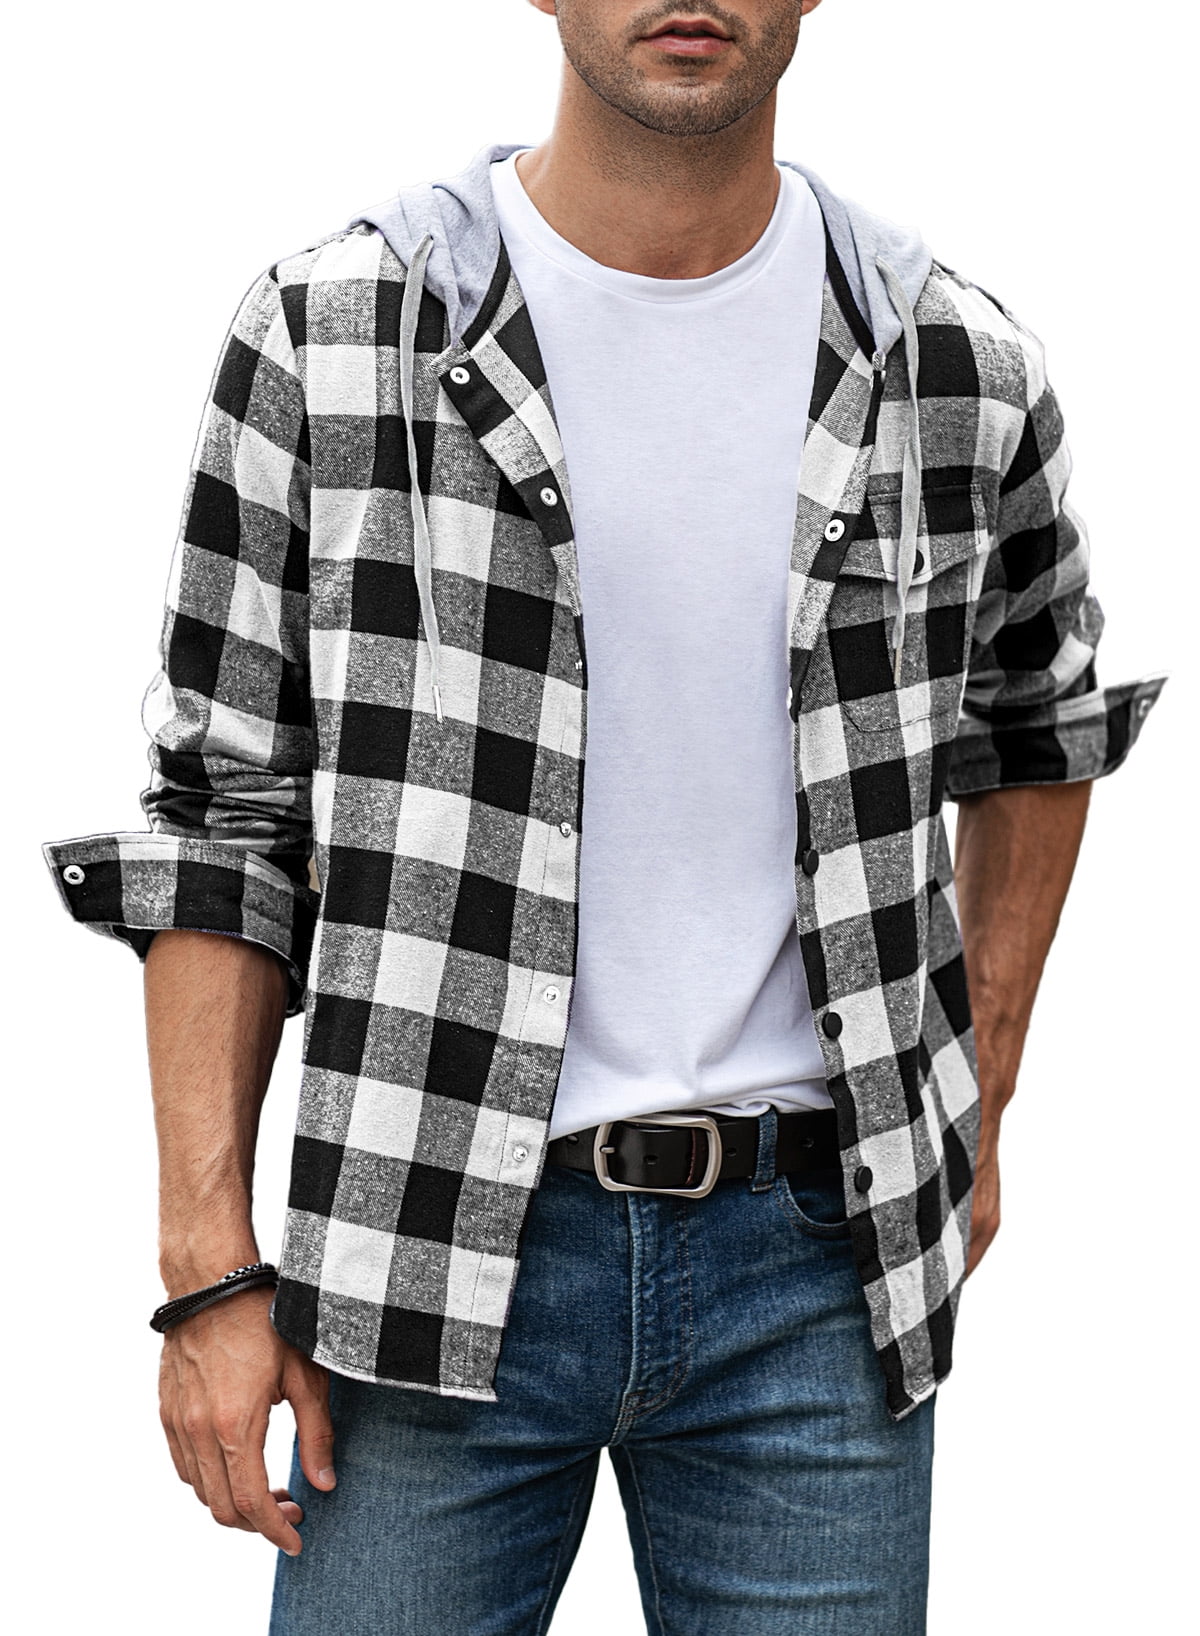 JMIERR Men's Casual Long Sleeve Hooded Flannel Shirts Lightweight